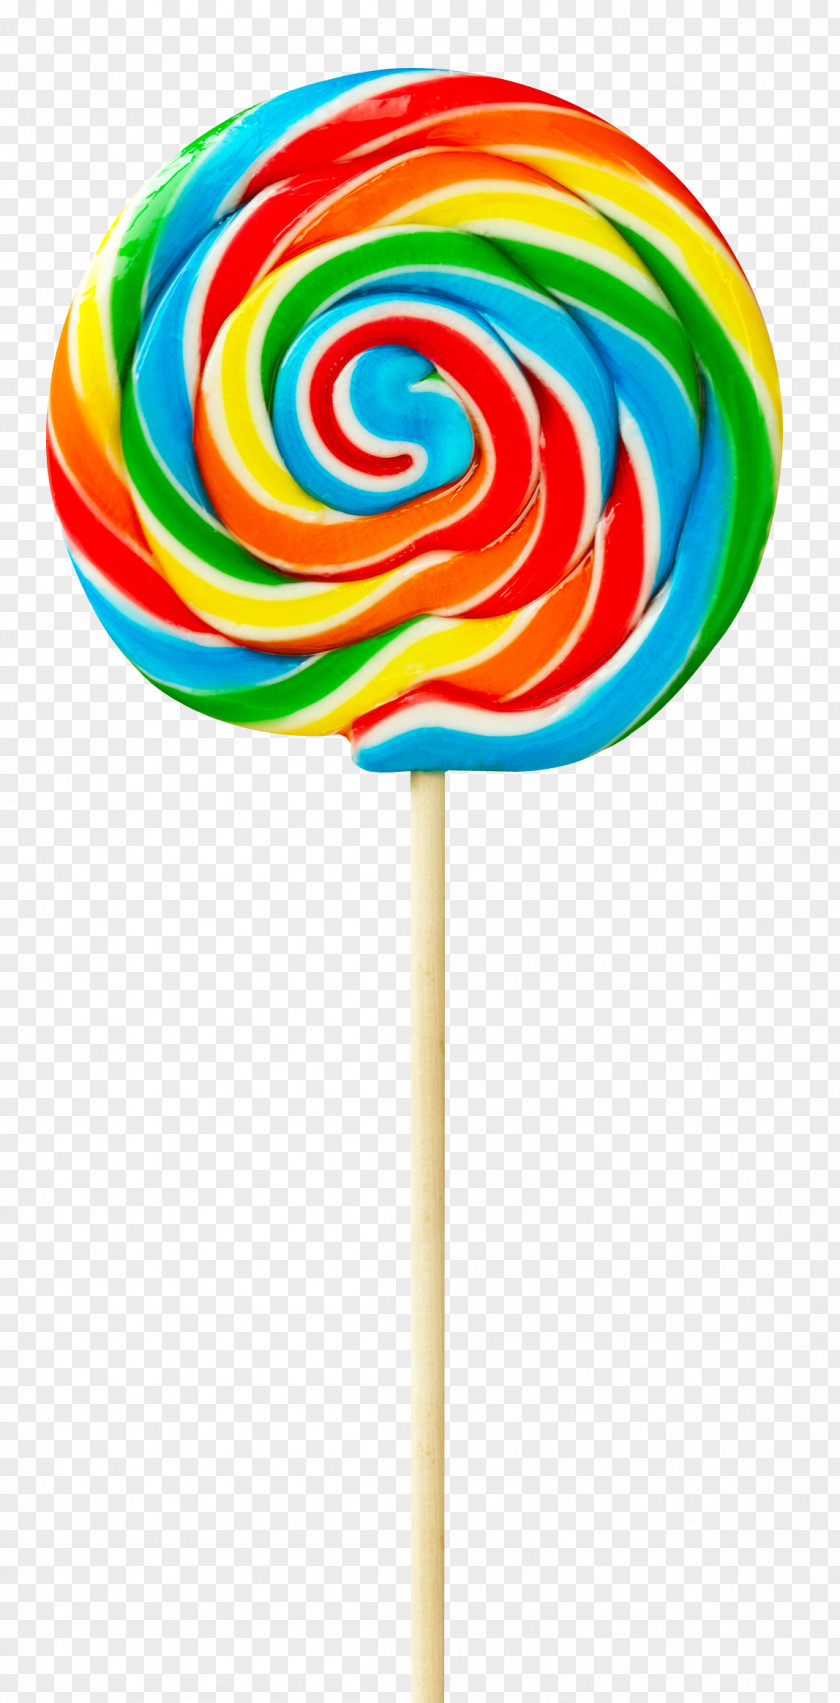 Colorful Lollipop Rock Candy PNG